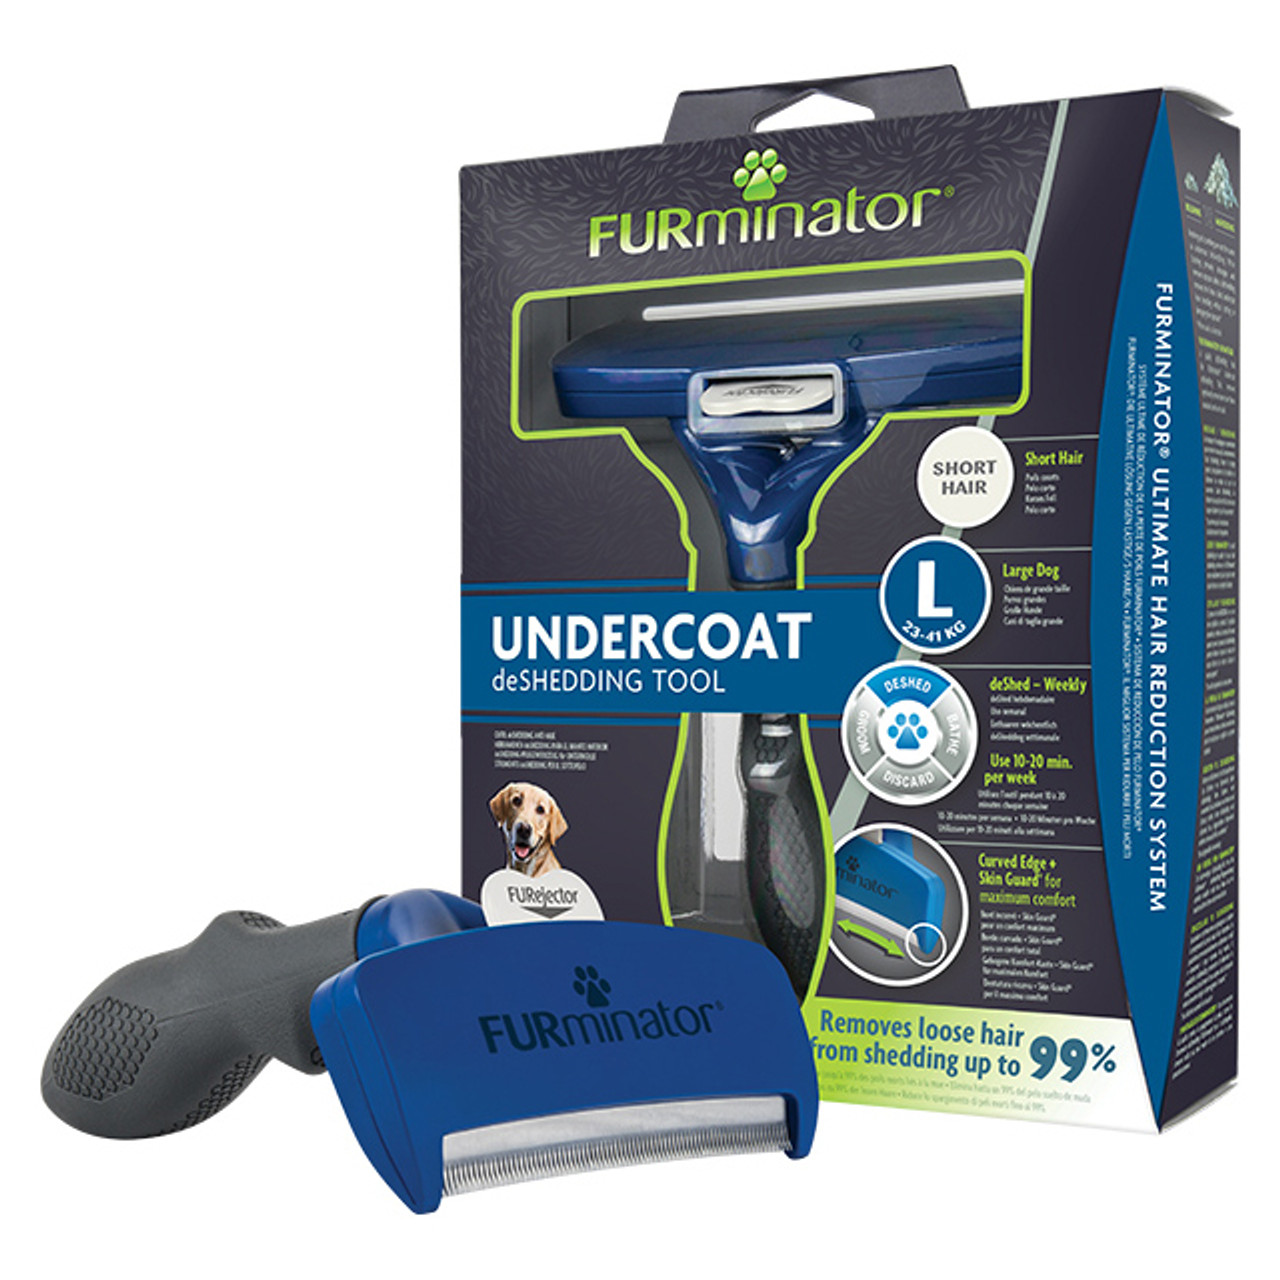 FURminator Large Dog Short Hair deShedding Tool | Hyperdrug